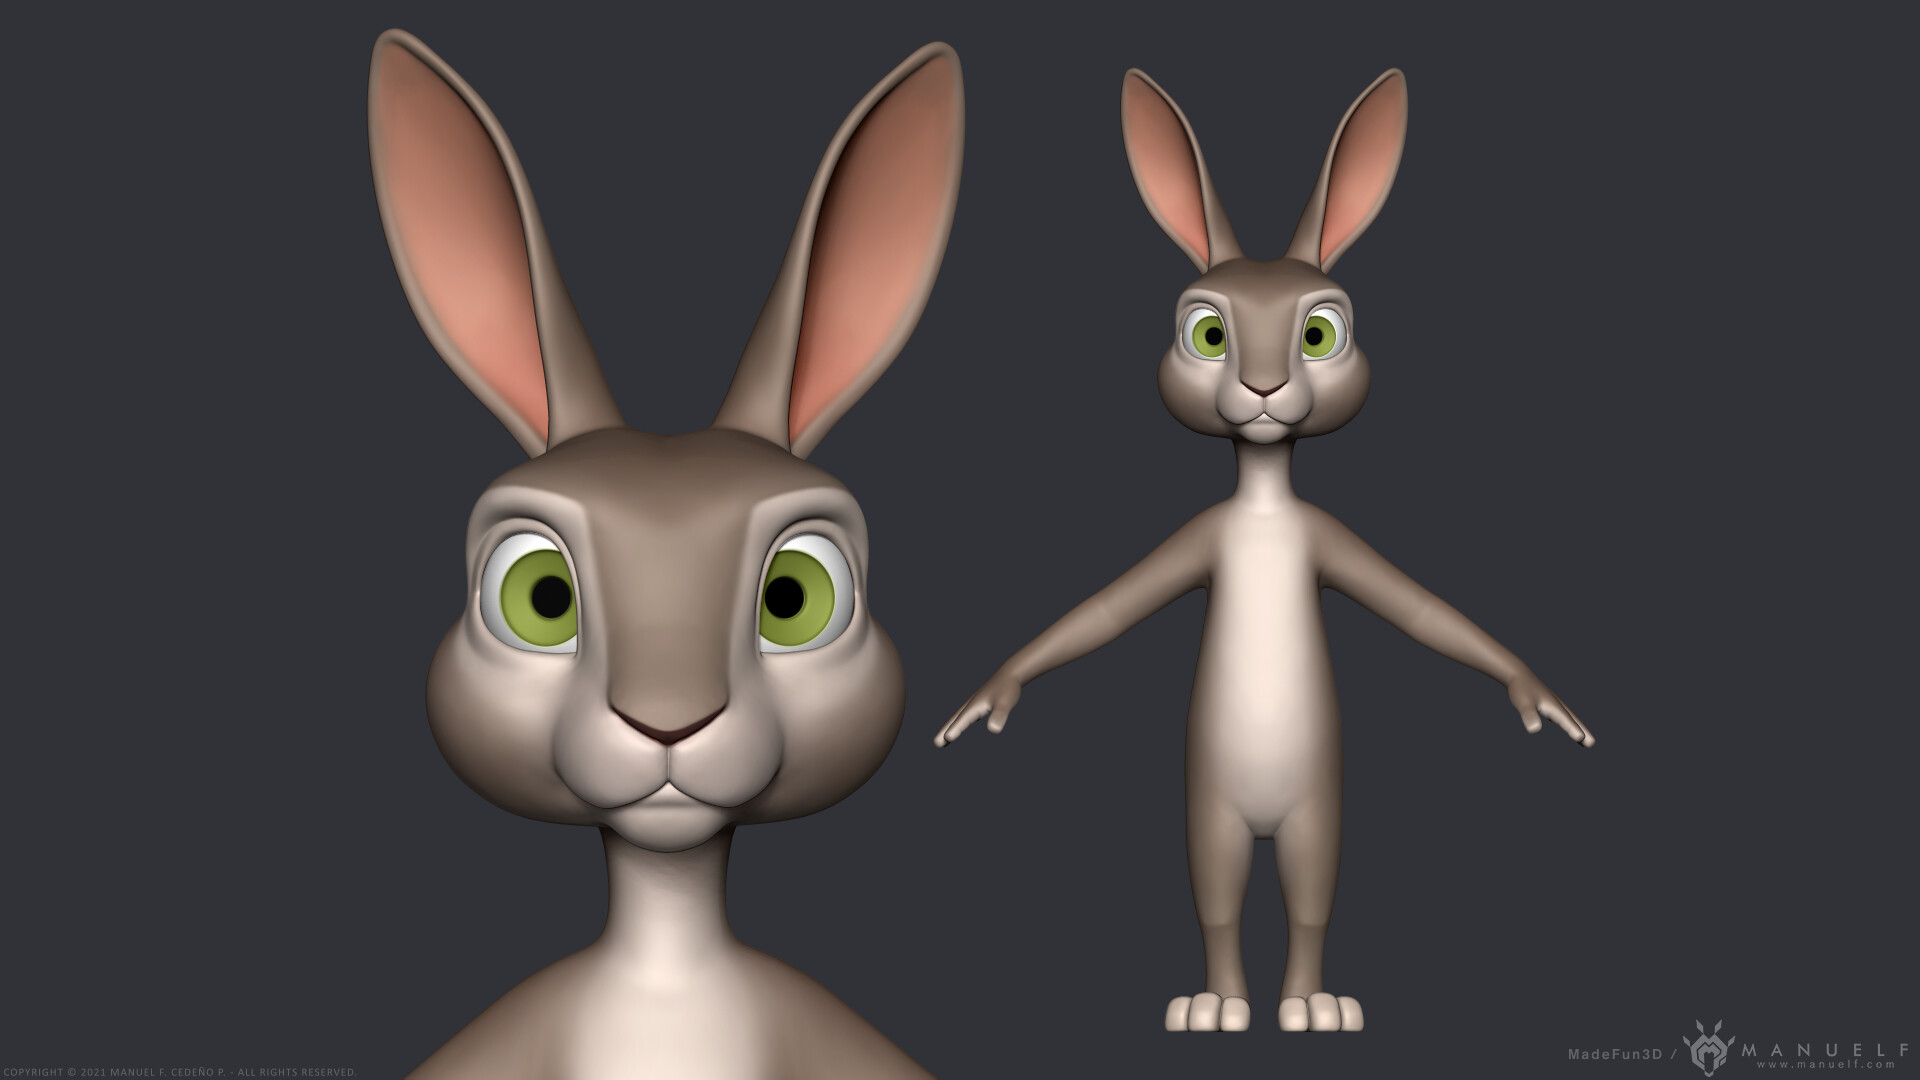 ArtStation - Stylized Cartoon Rabbit - Biped